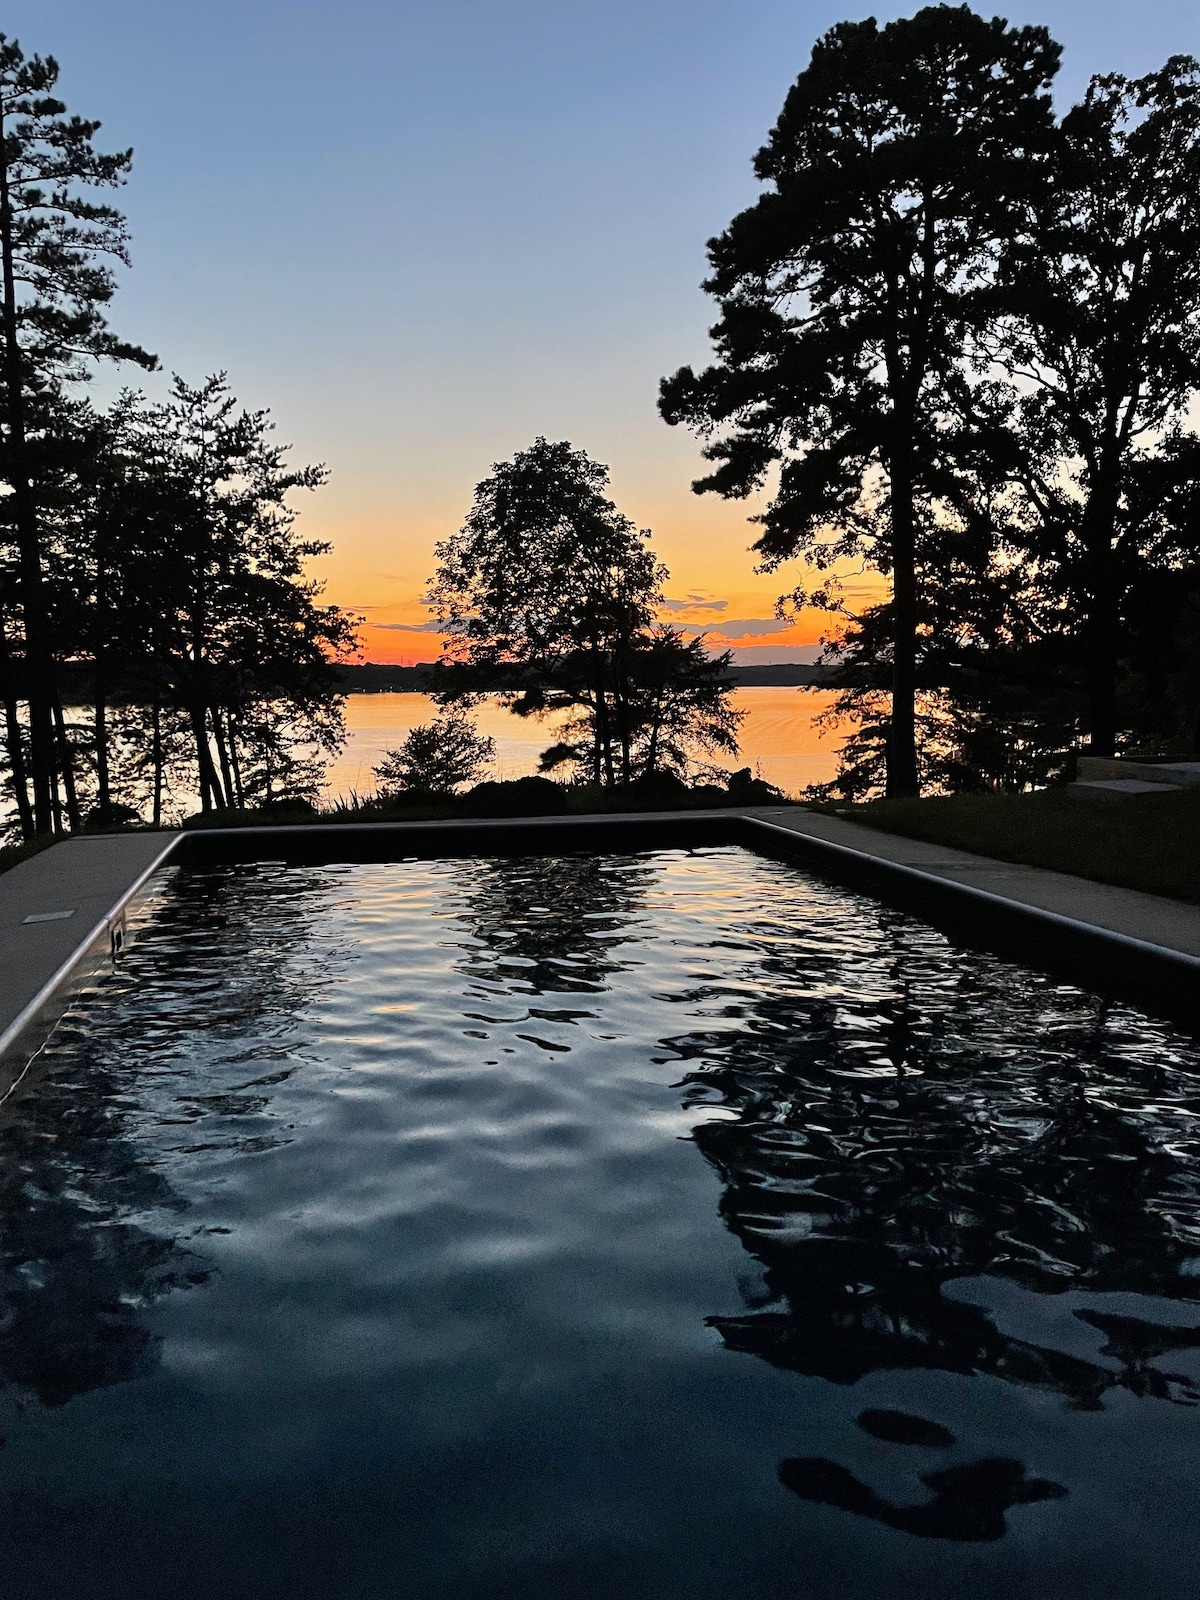 Modern Lake House | Stunning Views, Pool, Fire Pit